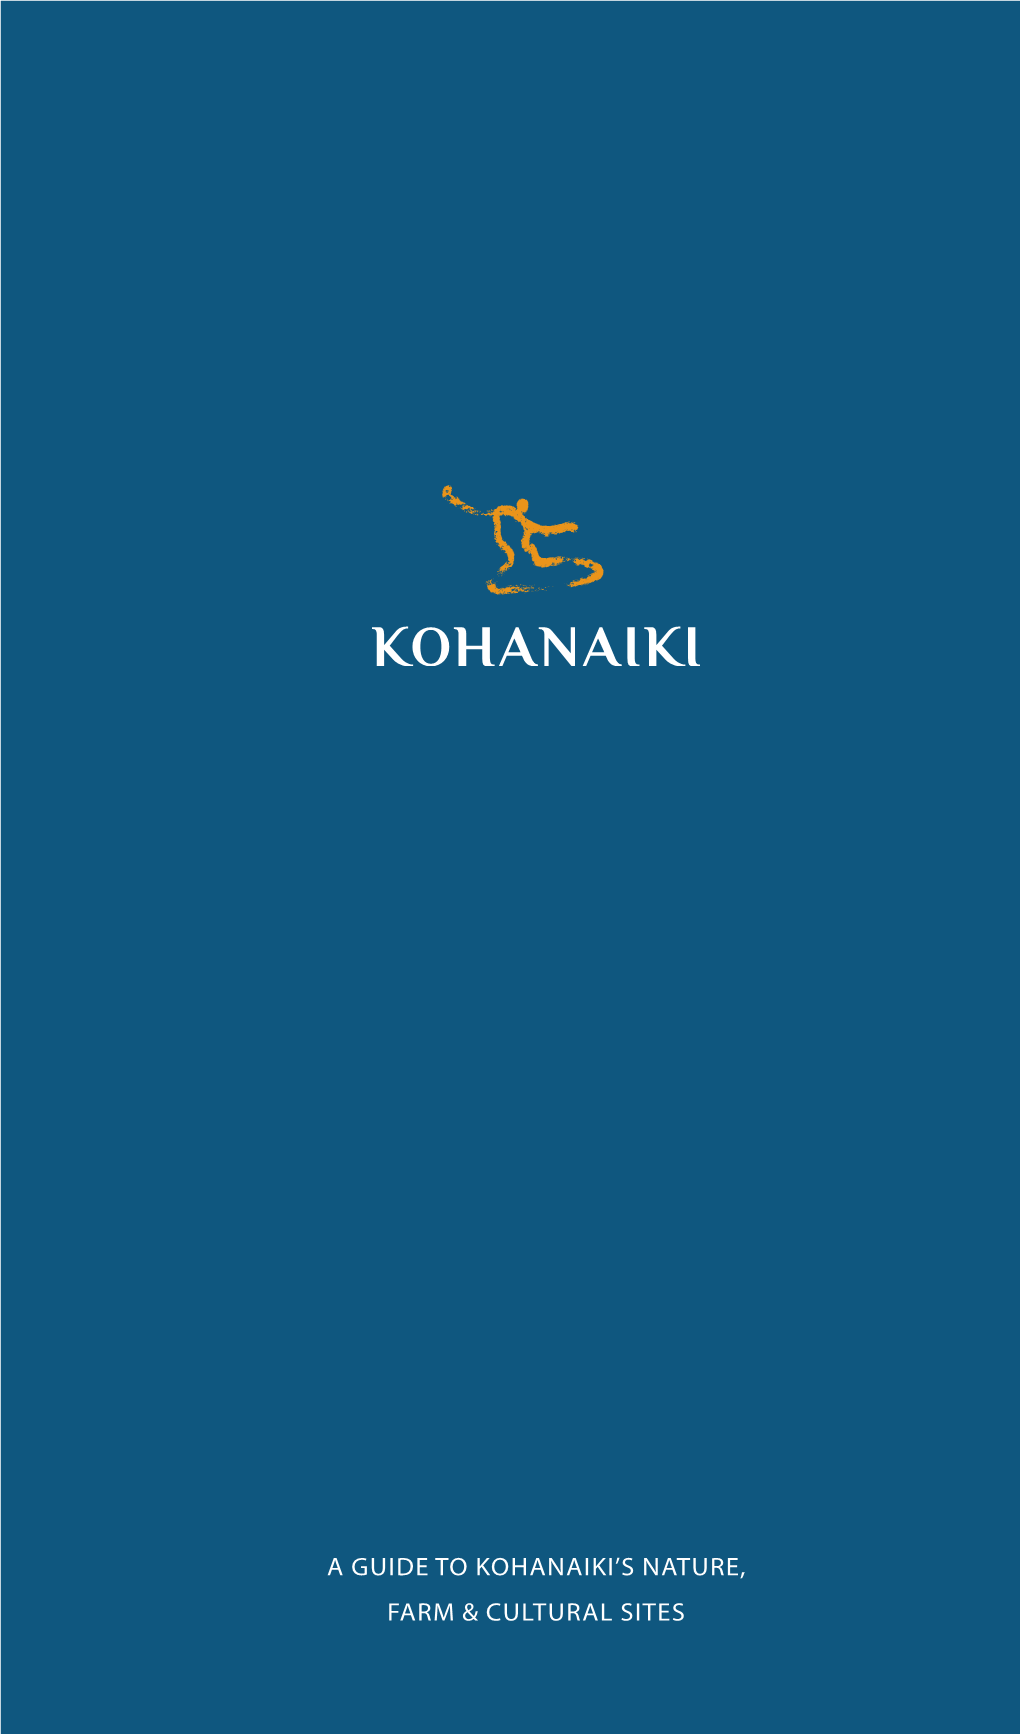 Kohanaiki Nature Guide Introduction